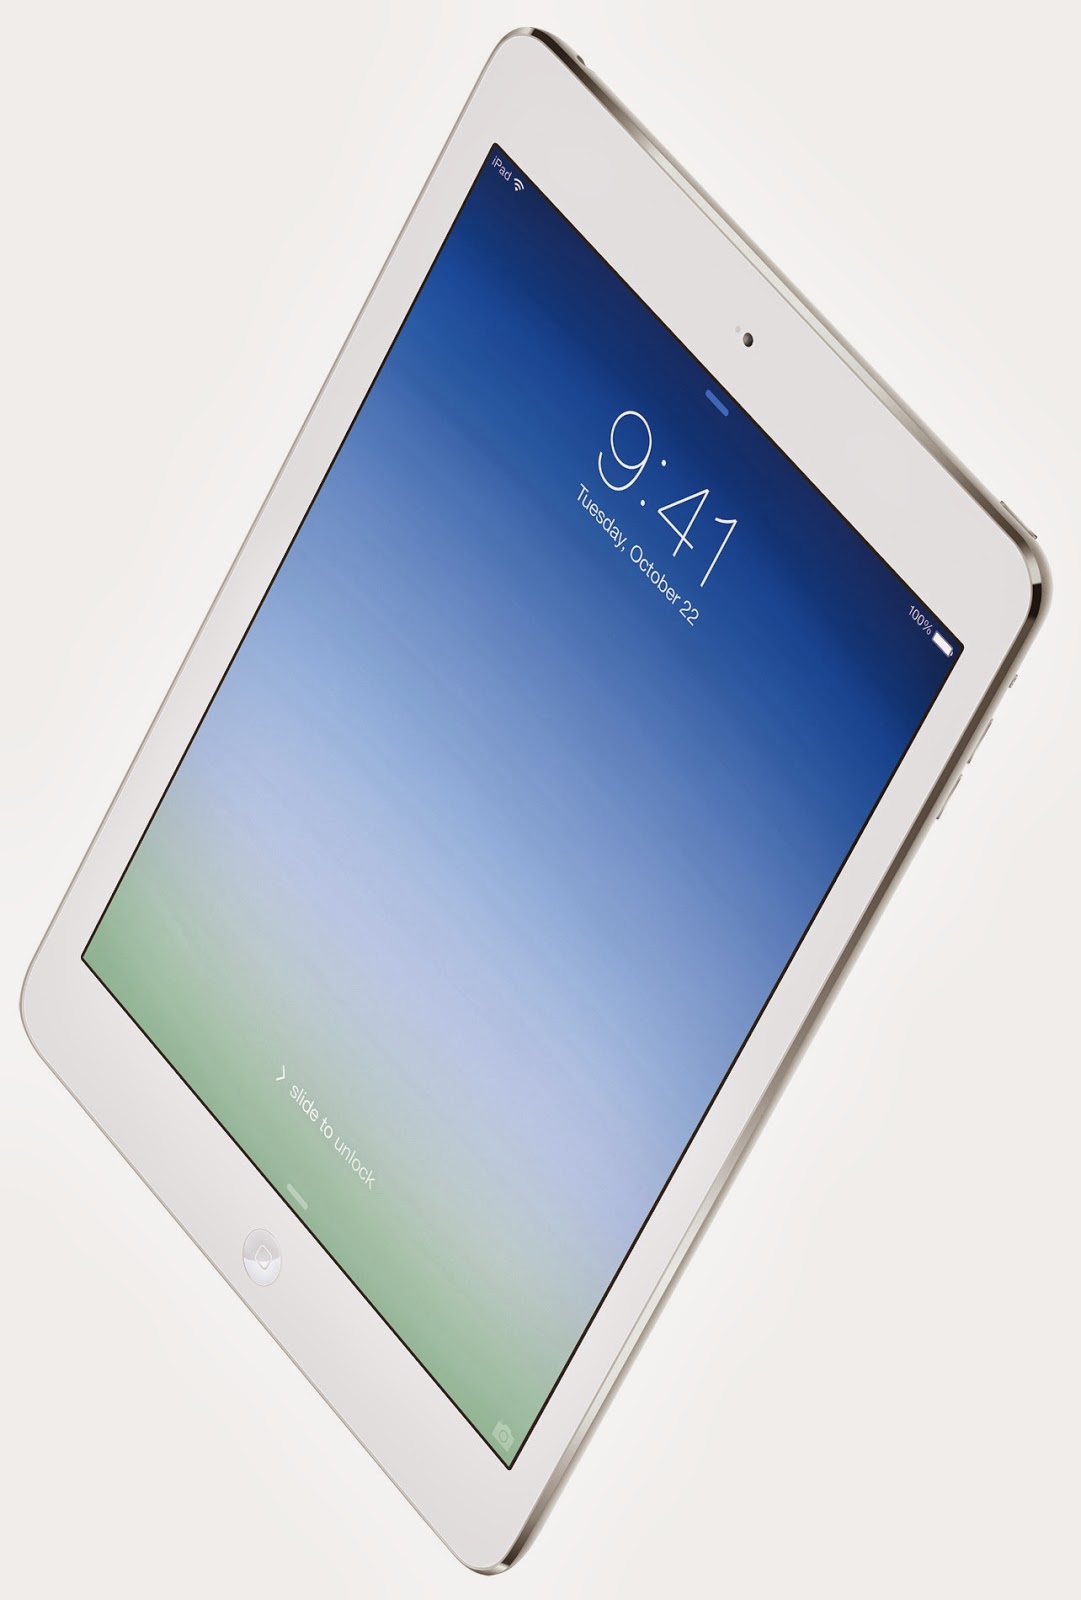 iPad Air (iPad 5th Generation)